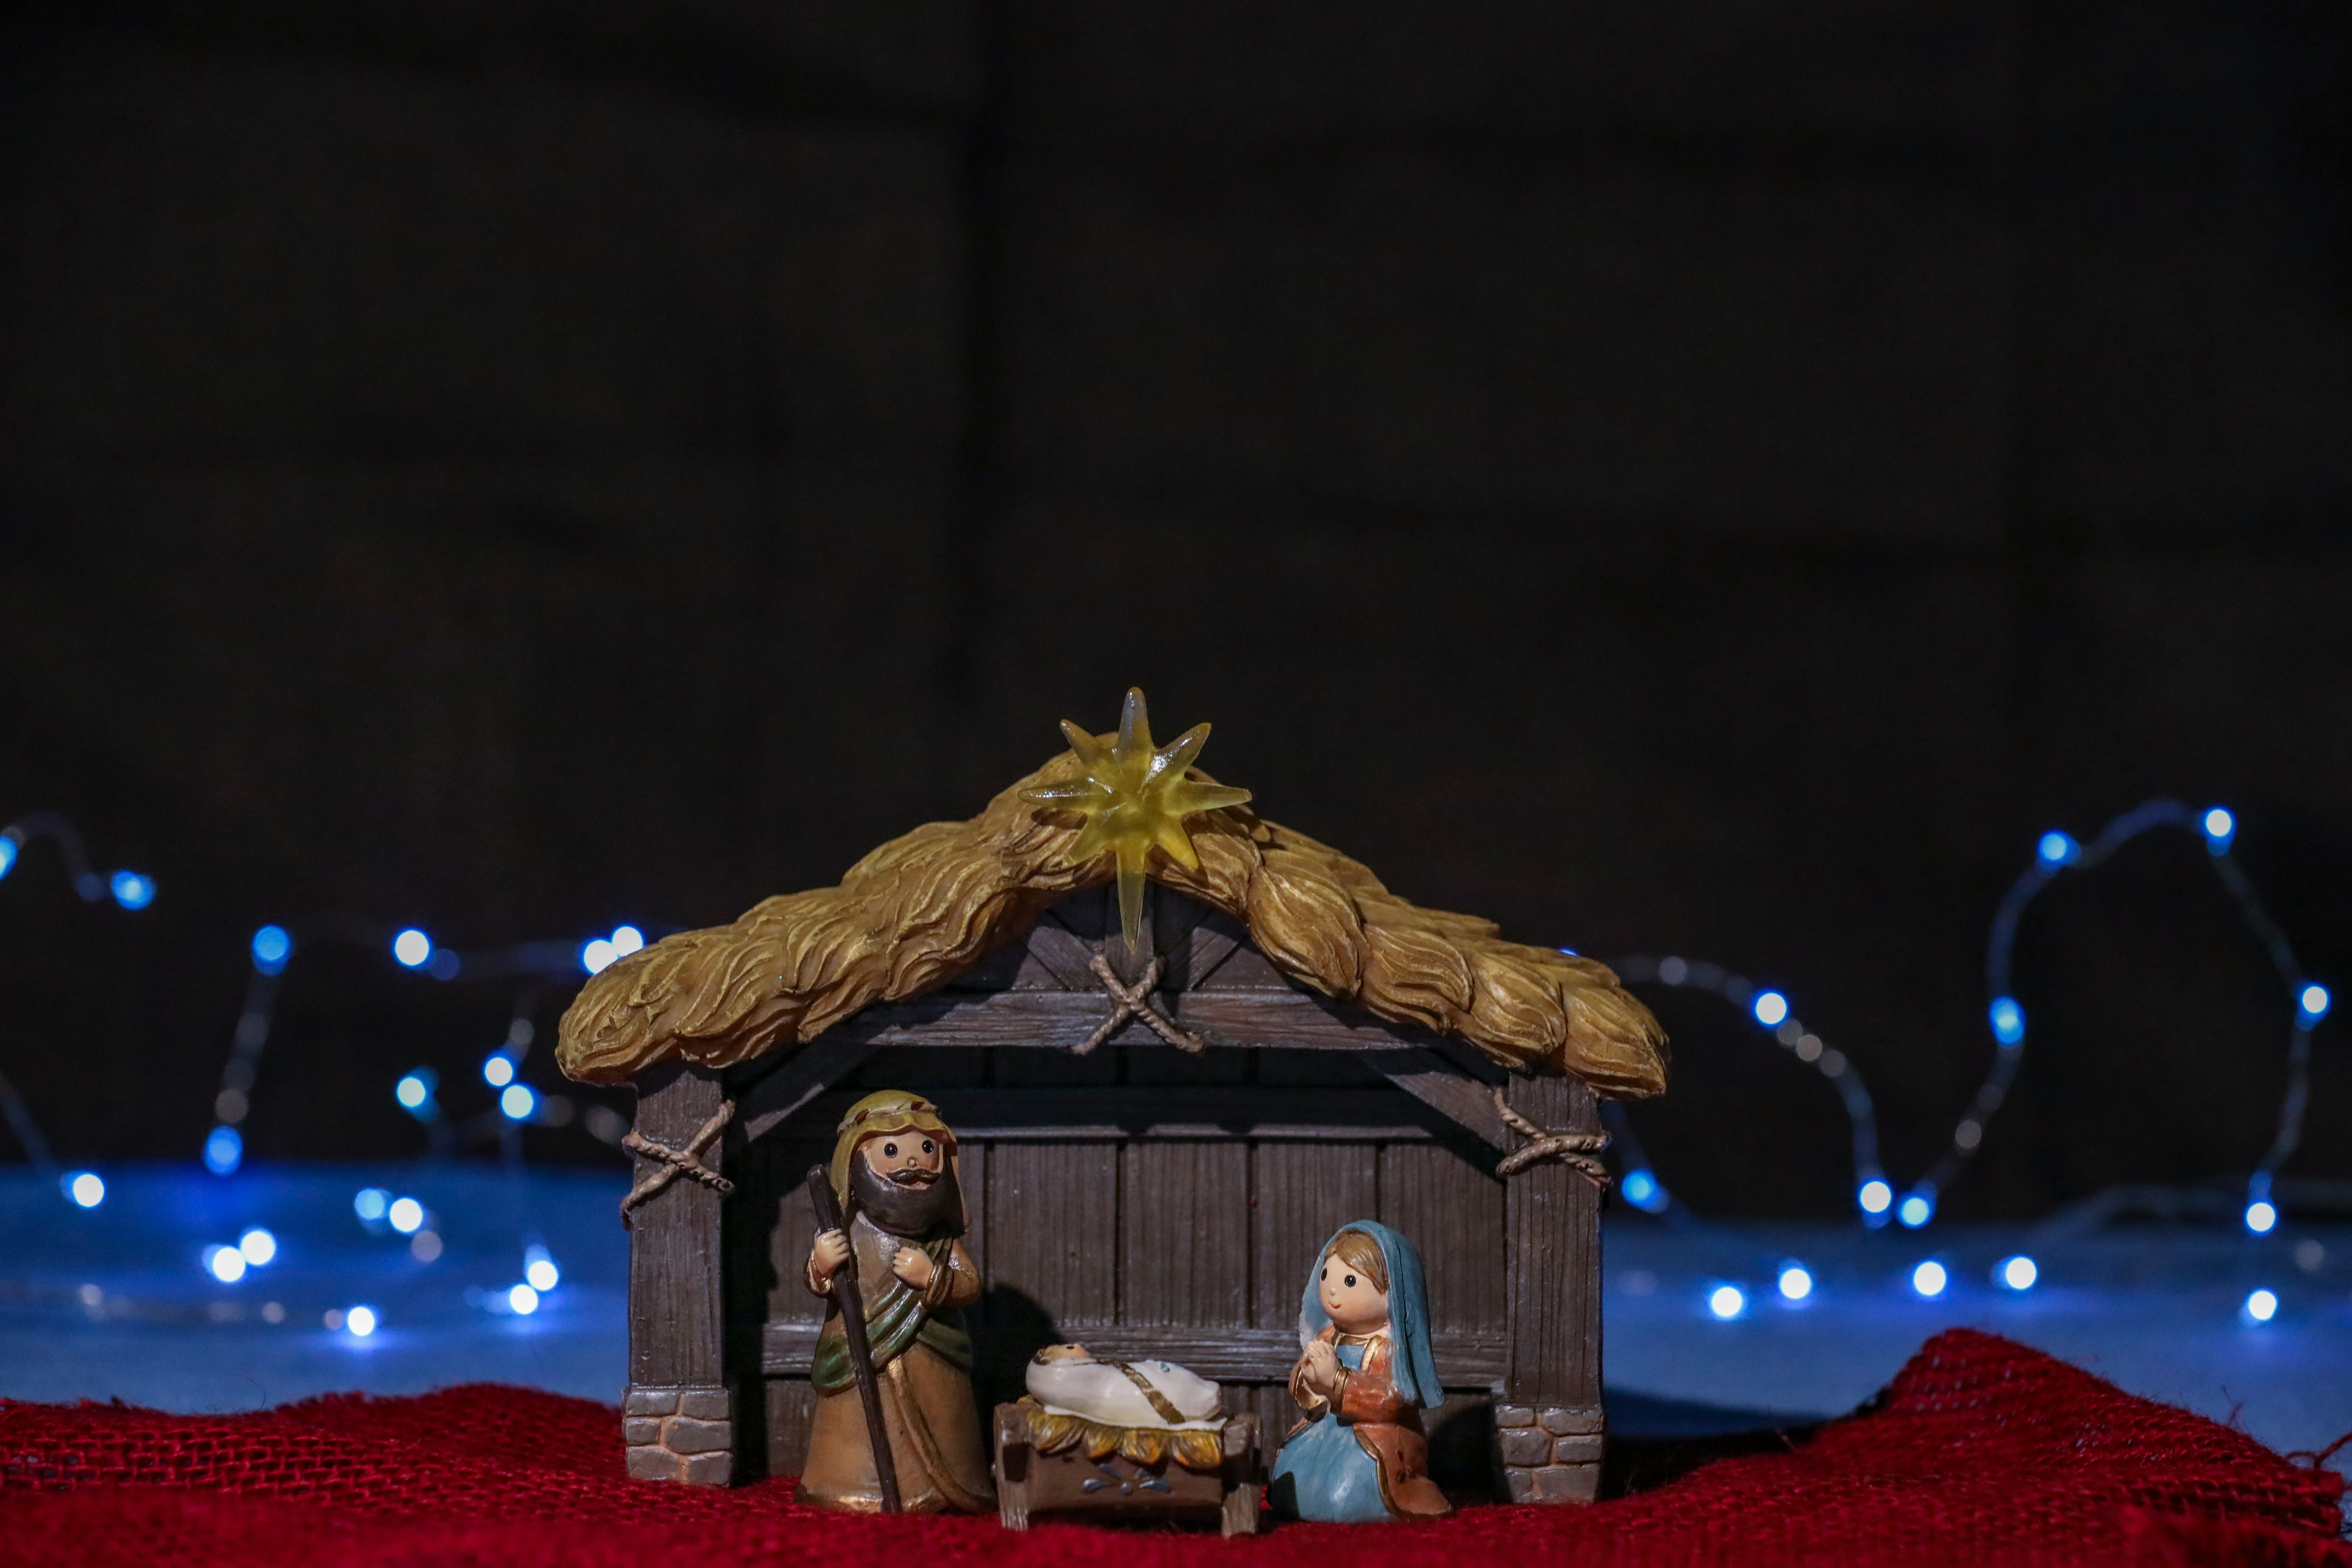 nativity scene figurine set during night time